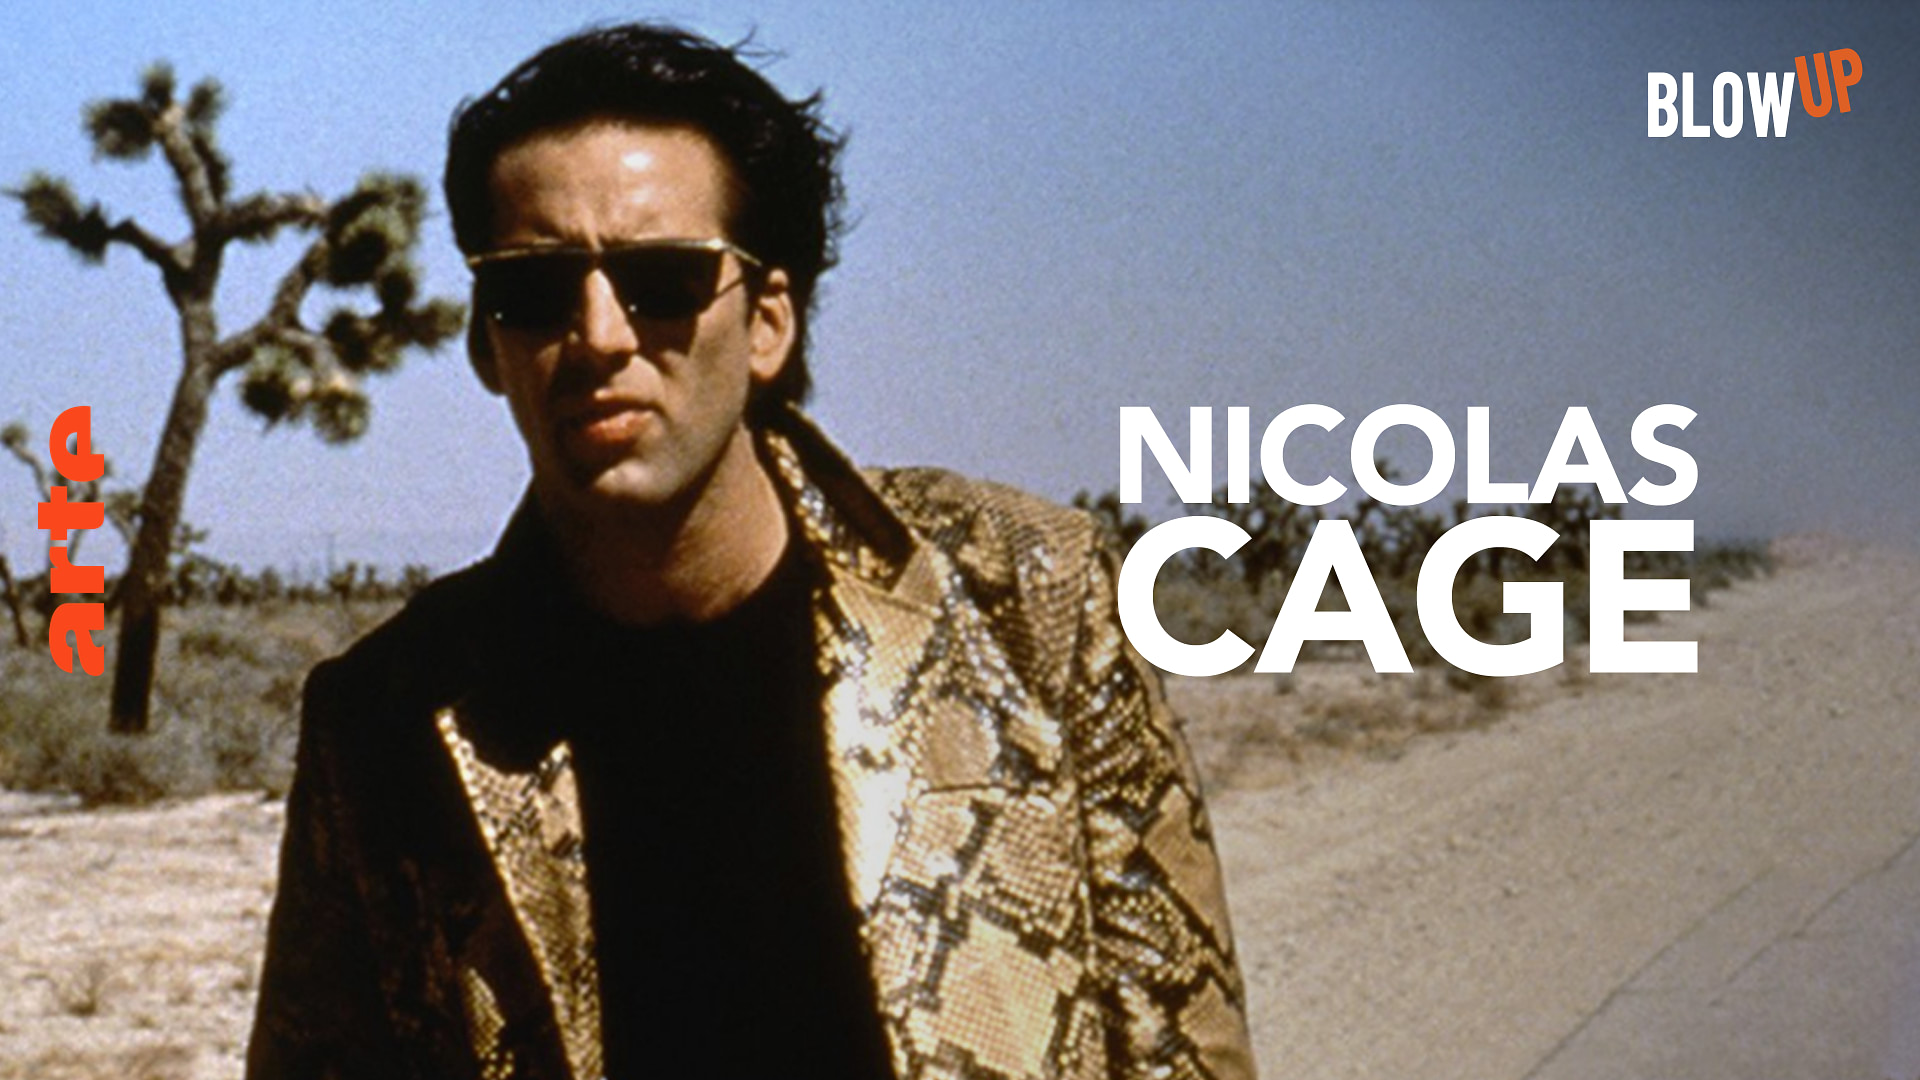 Blow up - Worum geht's bei Nicolas Cage?